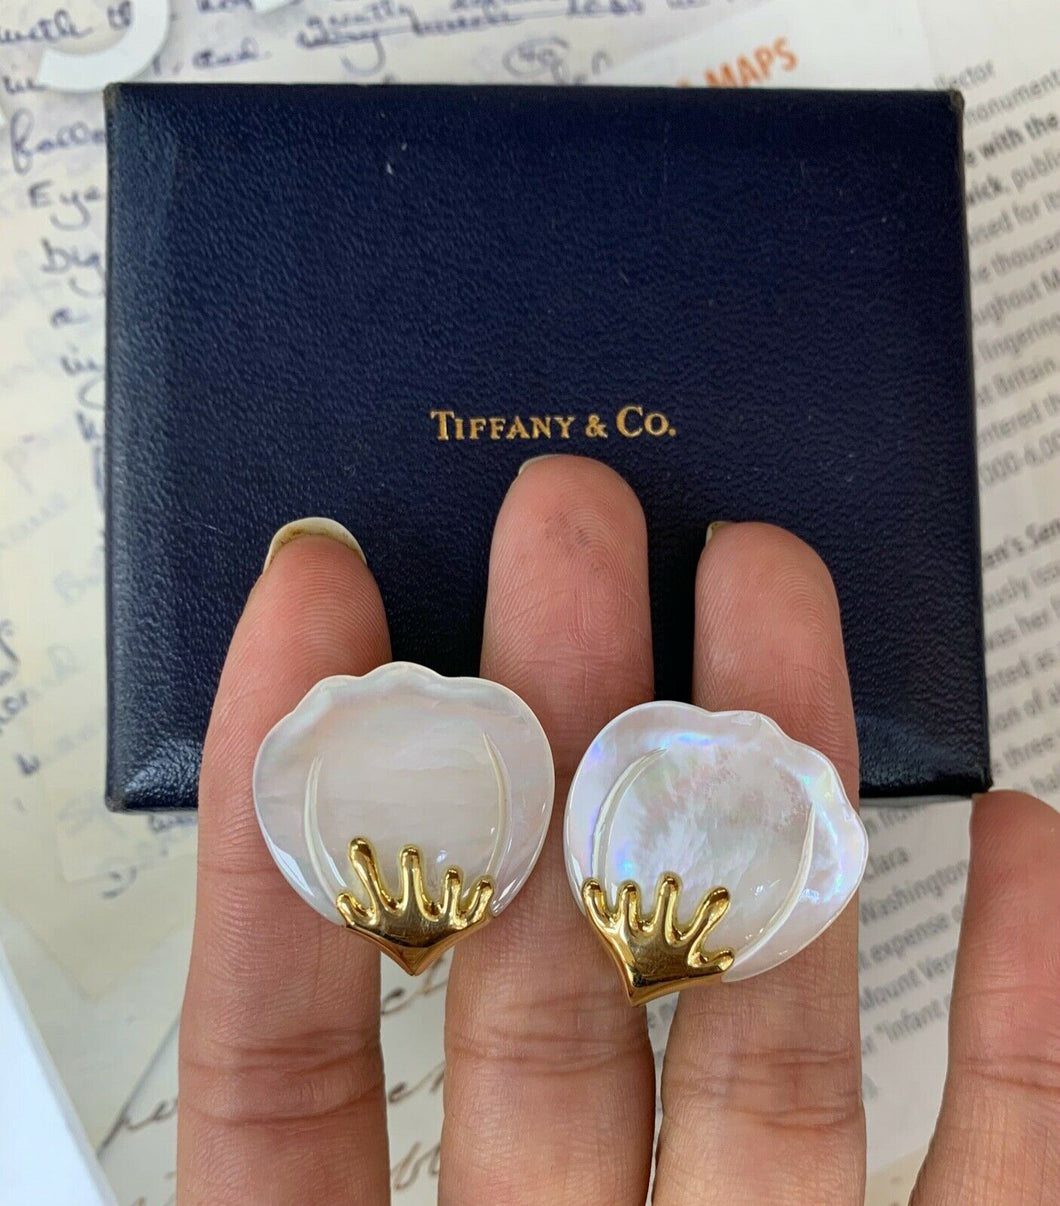 Tiffany and Co. Angela Cummings 18K YG Mother of Pearl Flower Earrings